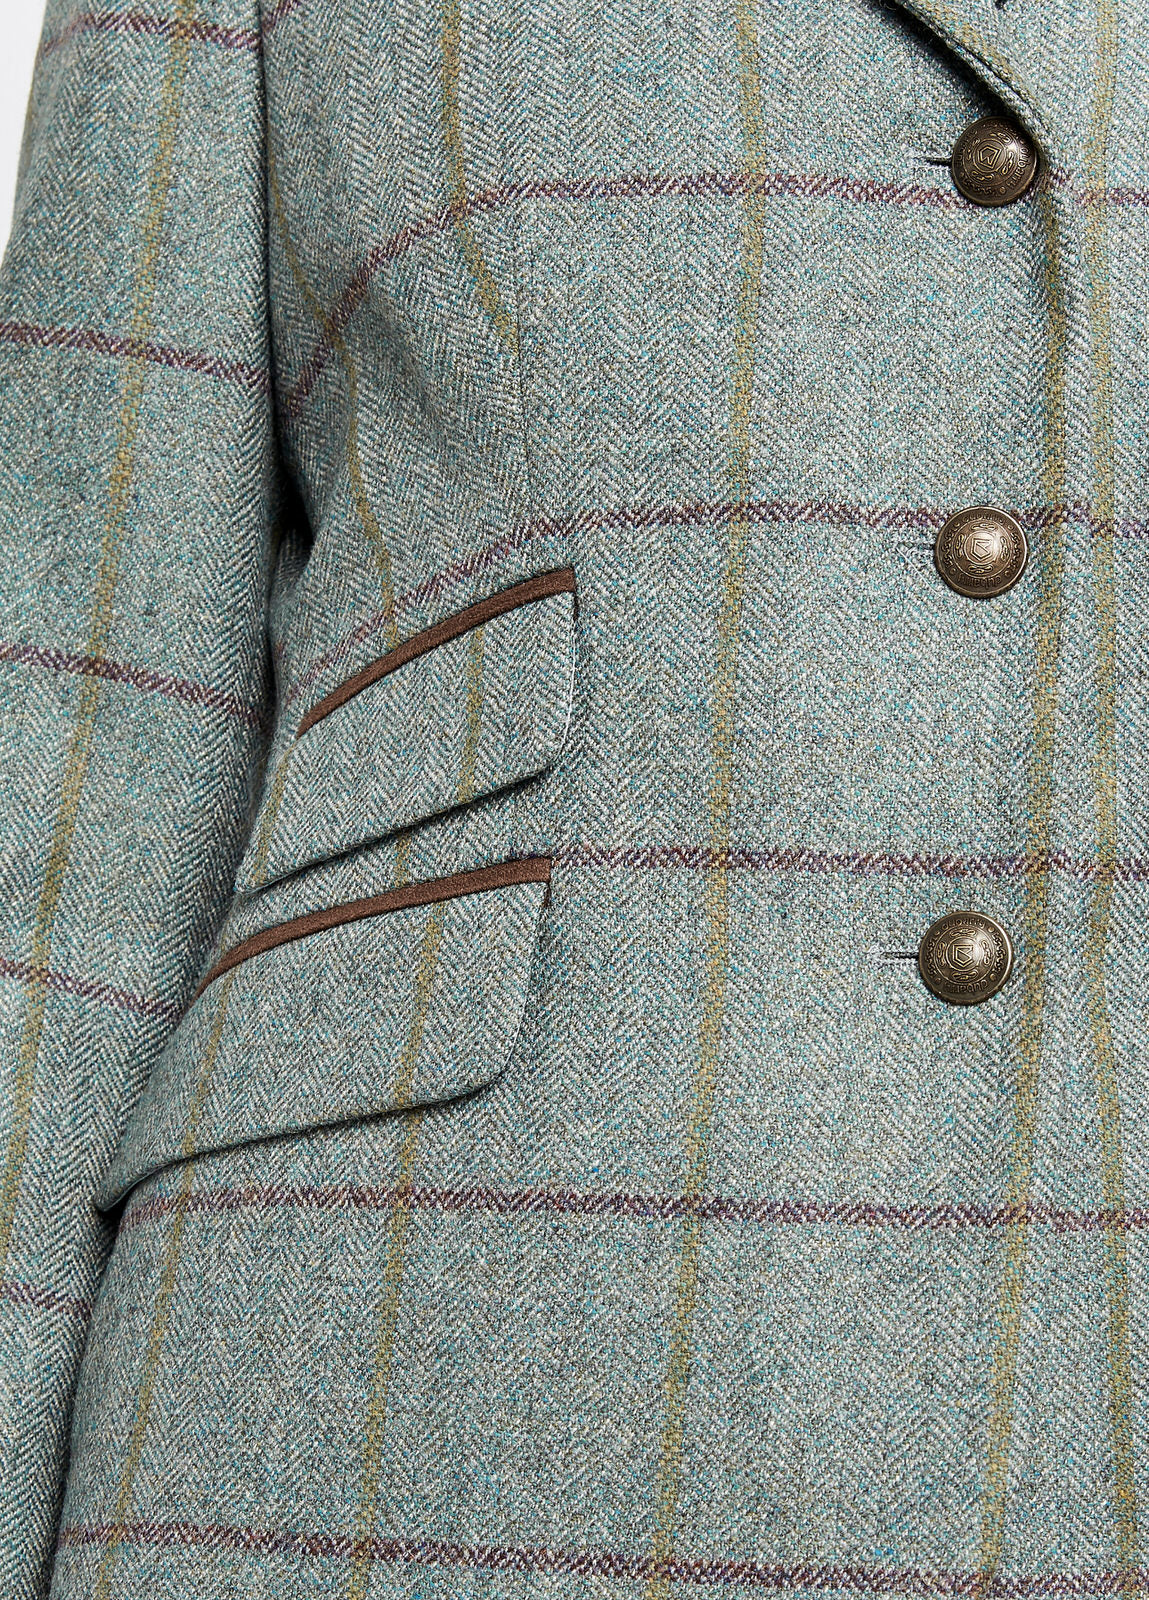 Buttercup Tweed Jacket - Sorrel